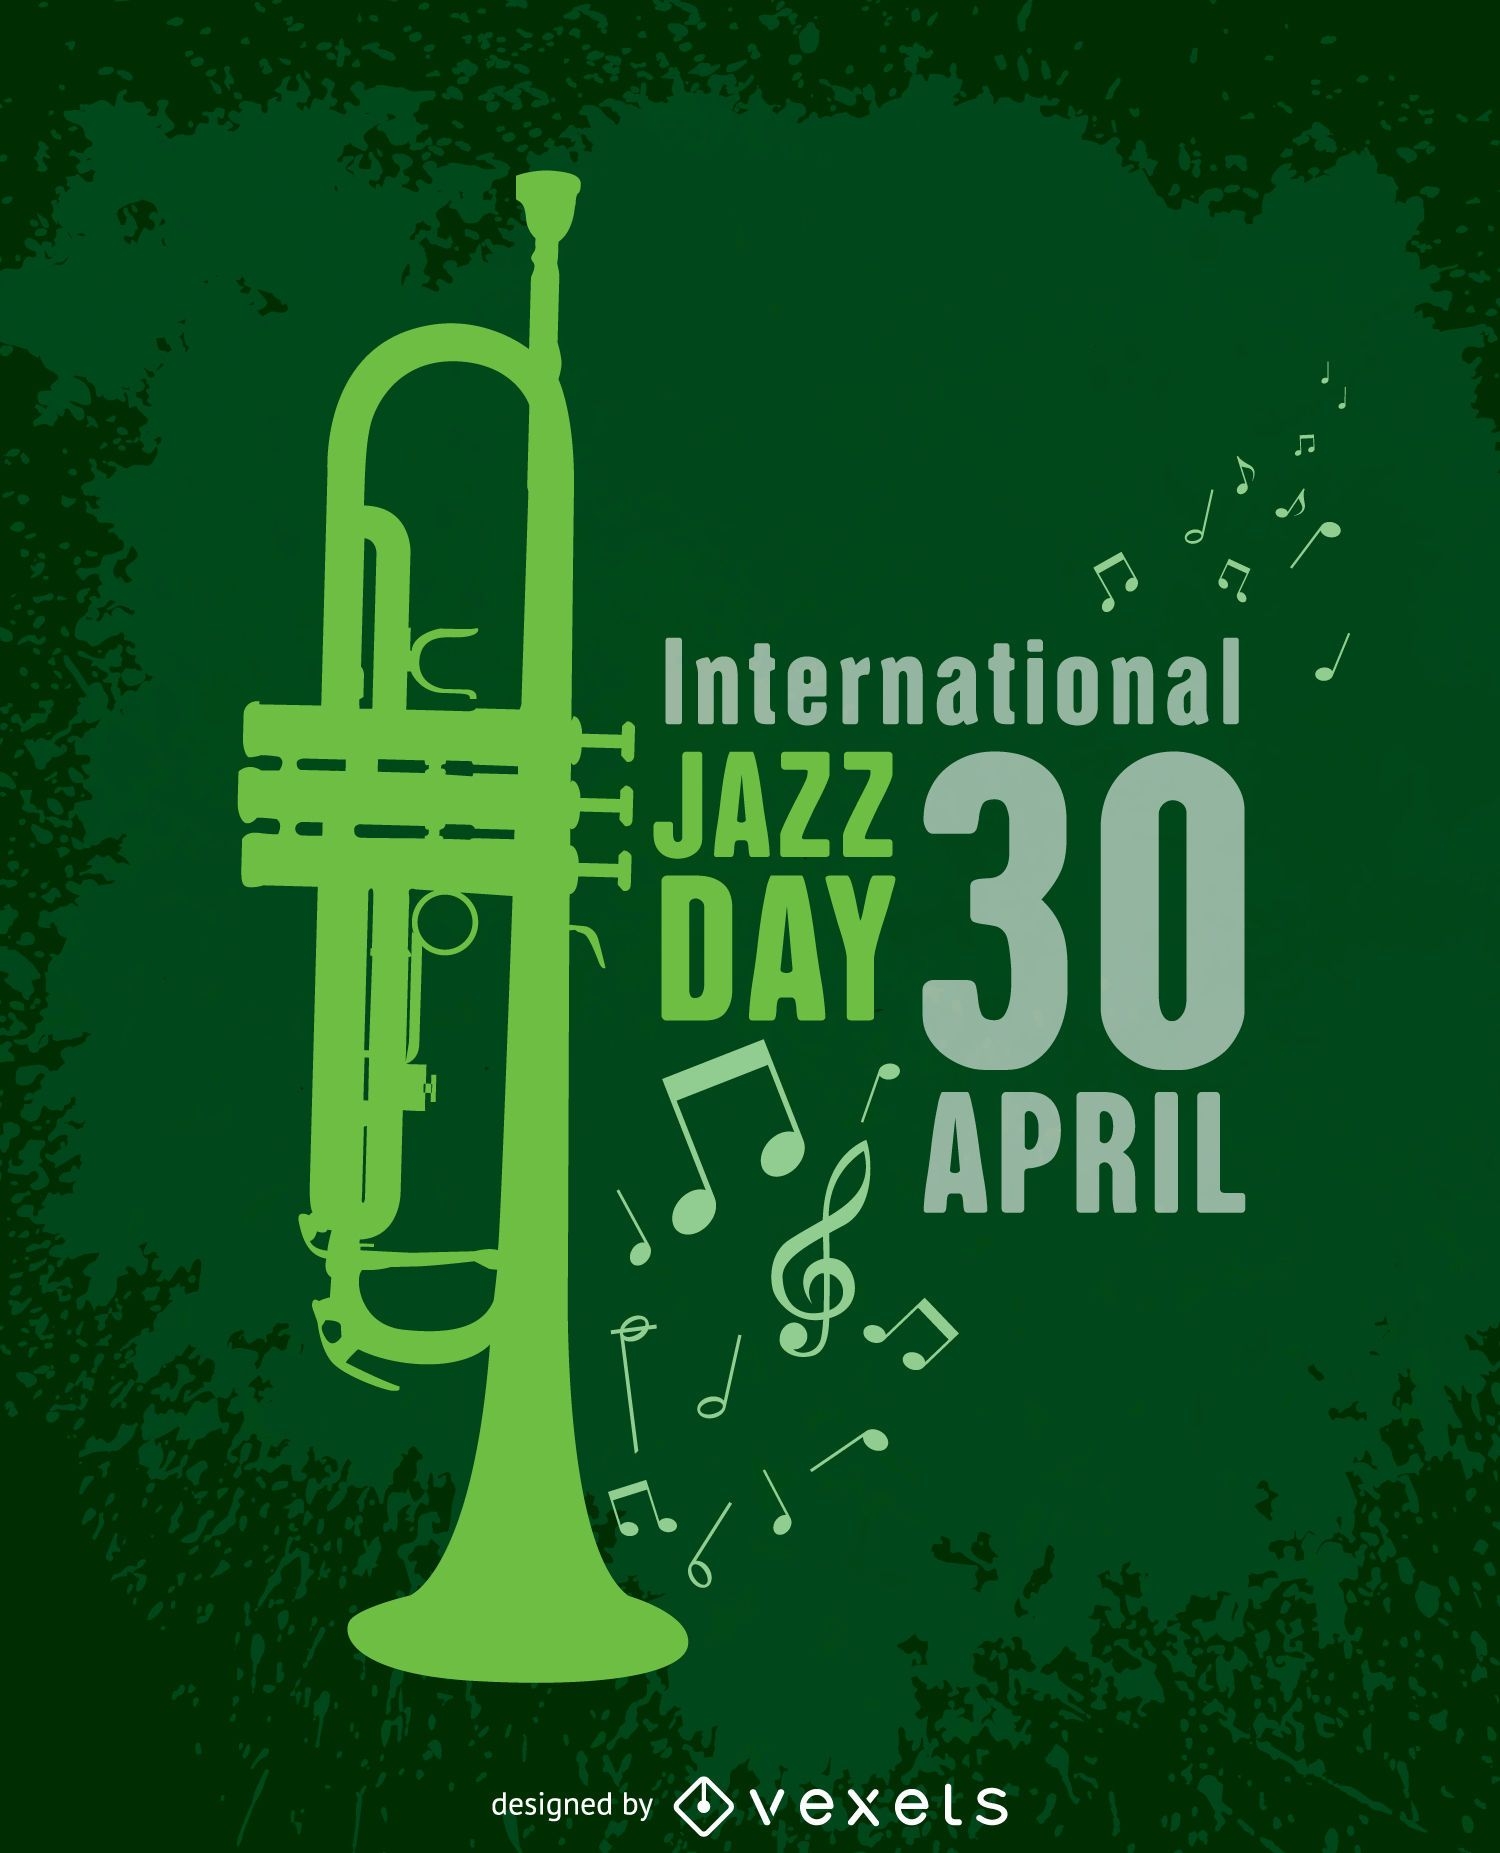 April 30th International Jazz Day 